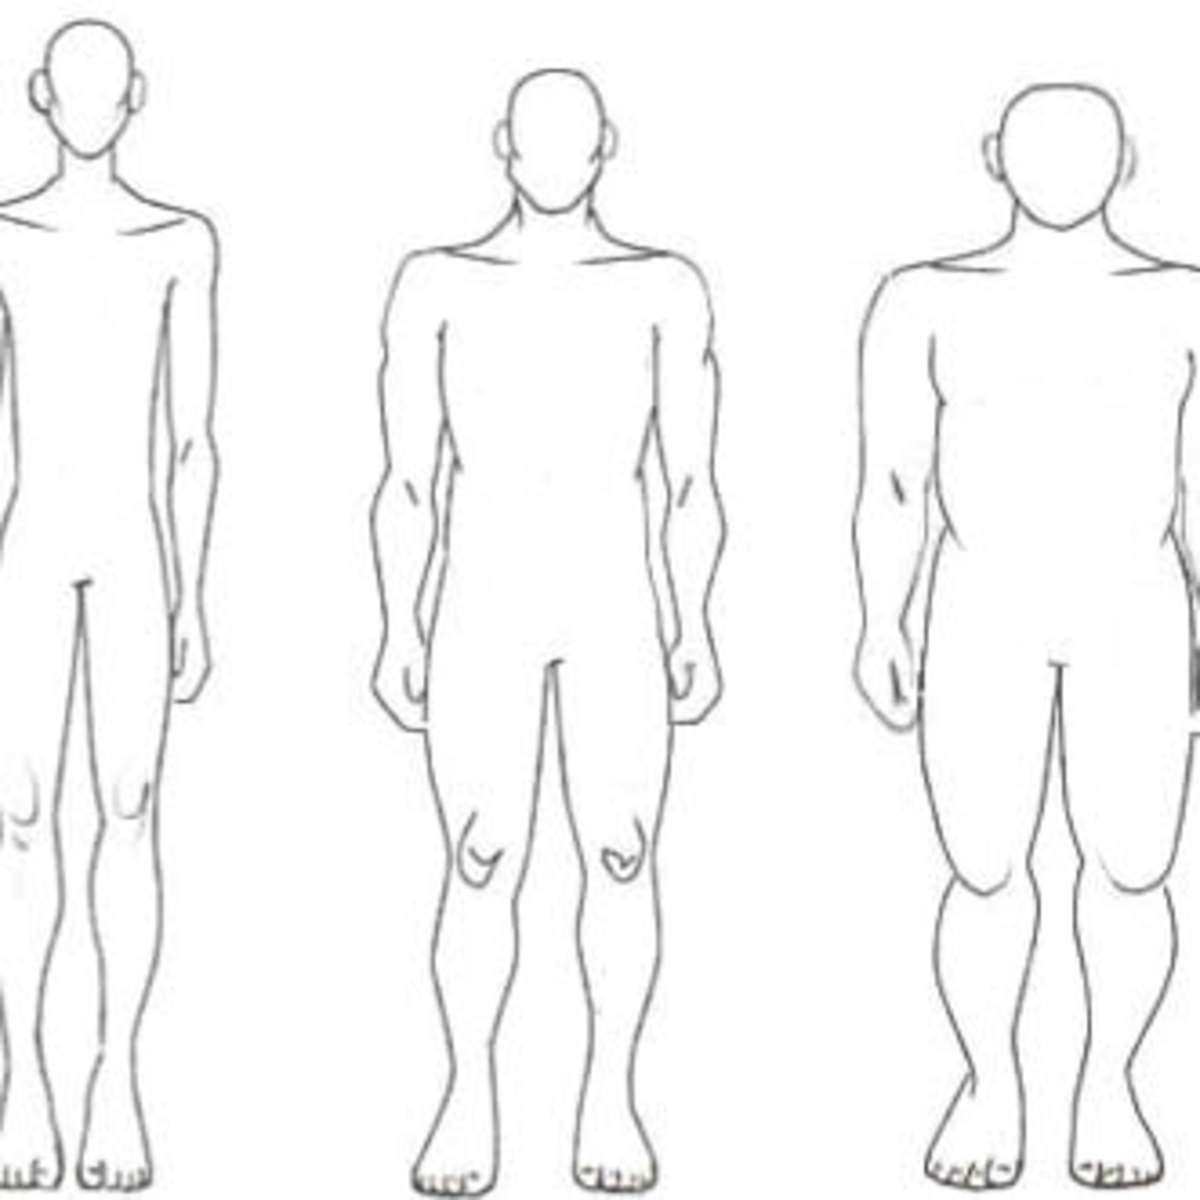 Human types. Plain Shape фигура. Male body Shapes. Human Figure by Shapes. Body Size.